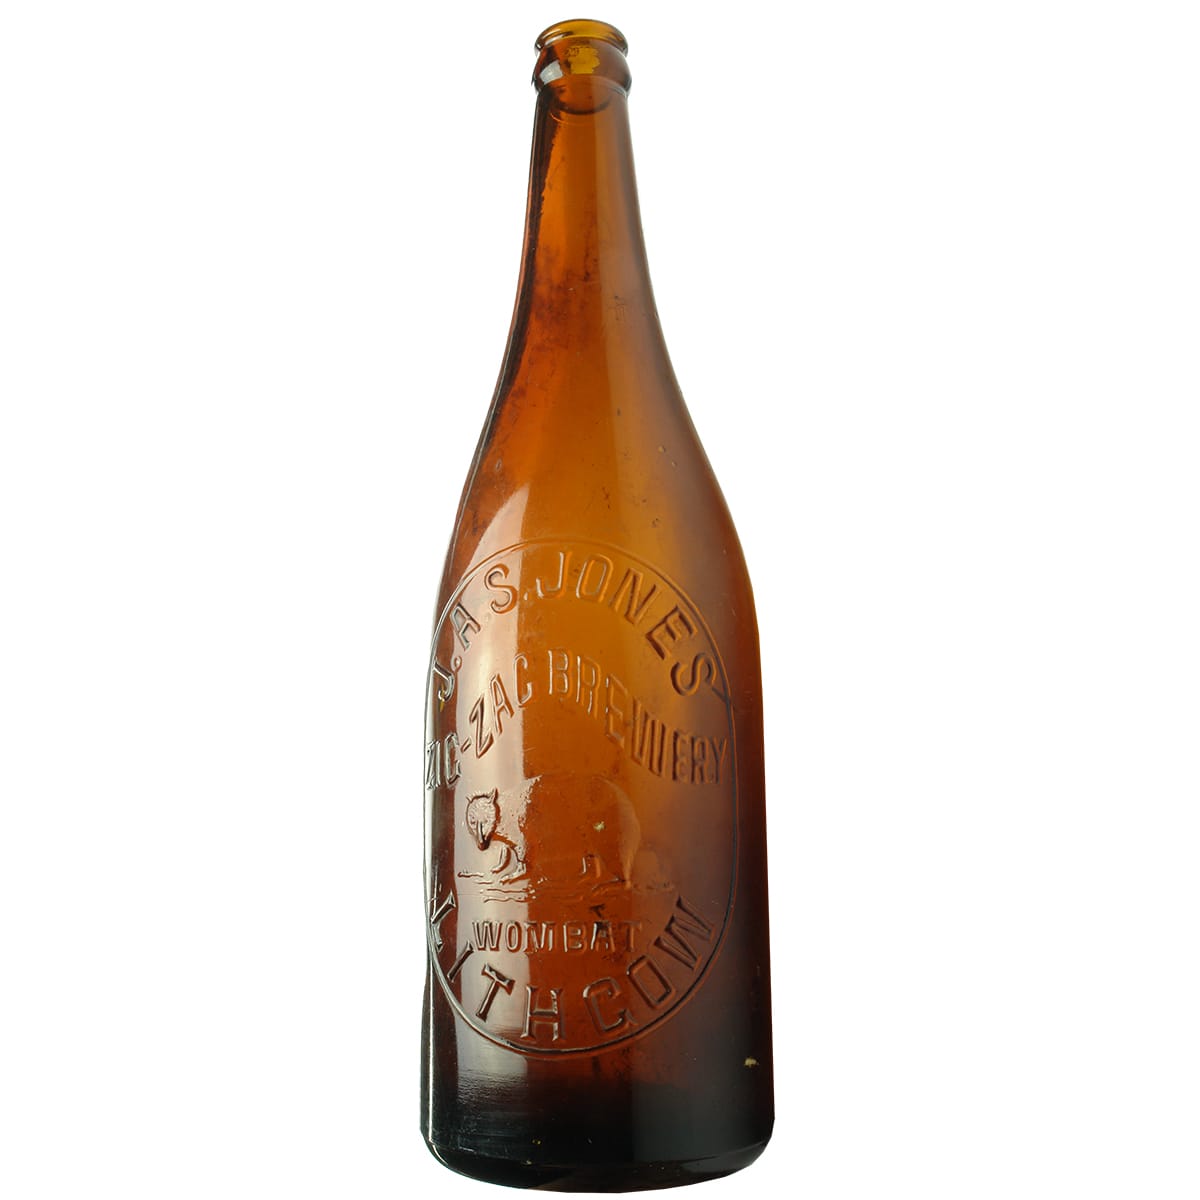 Beer. Jones, Zig Zag Brewery, Lithgow. Crown Seal. Amber. 26 oz.